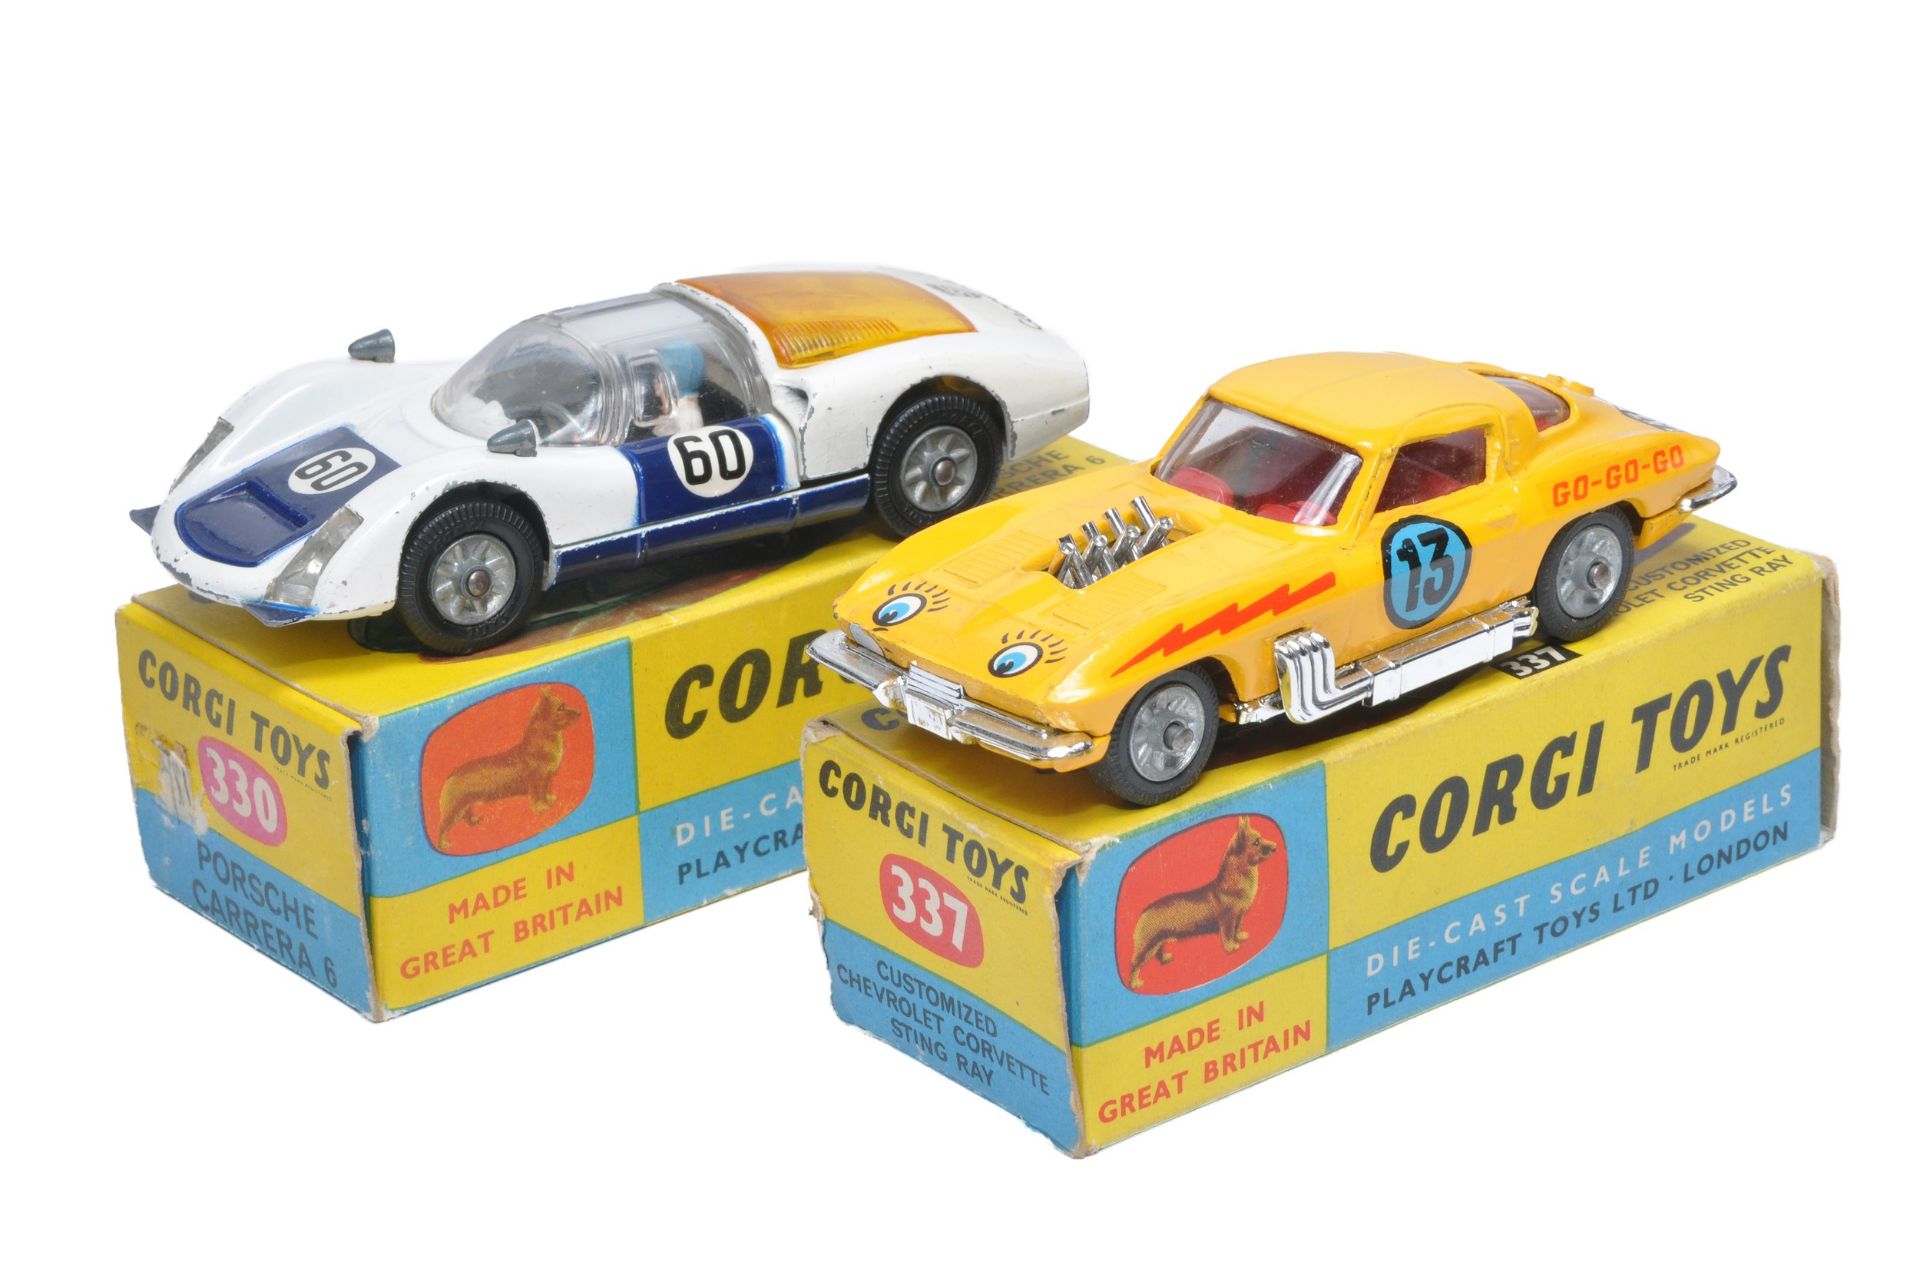 Corgi duo of No. 330 Porsche Carrera and No. 337 Customised Chevrolet Stingray. Both display